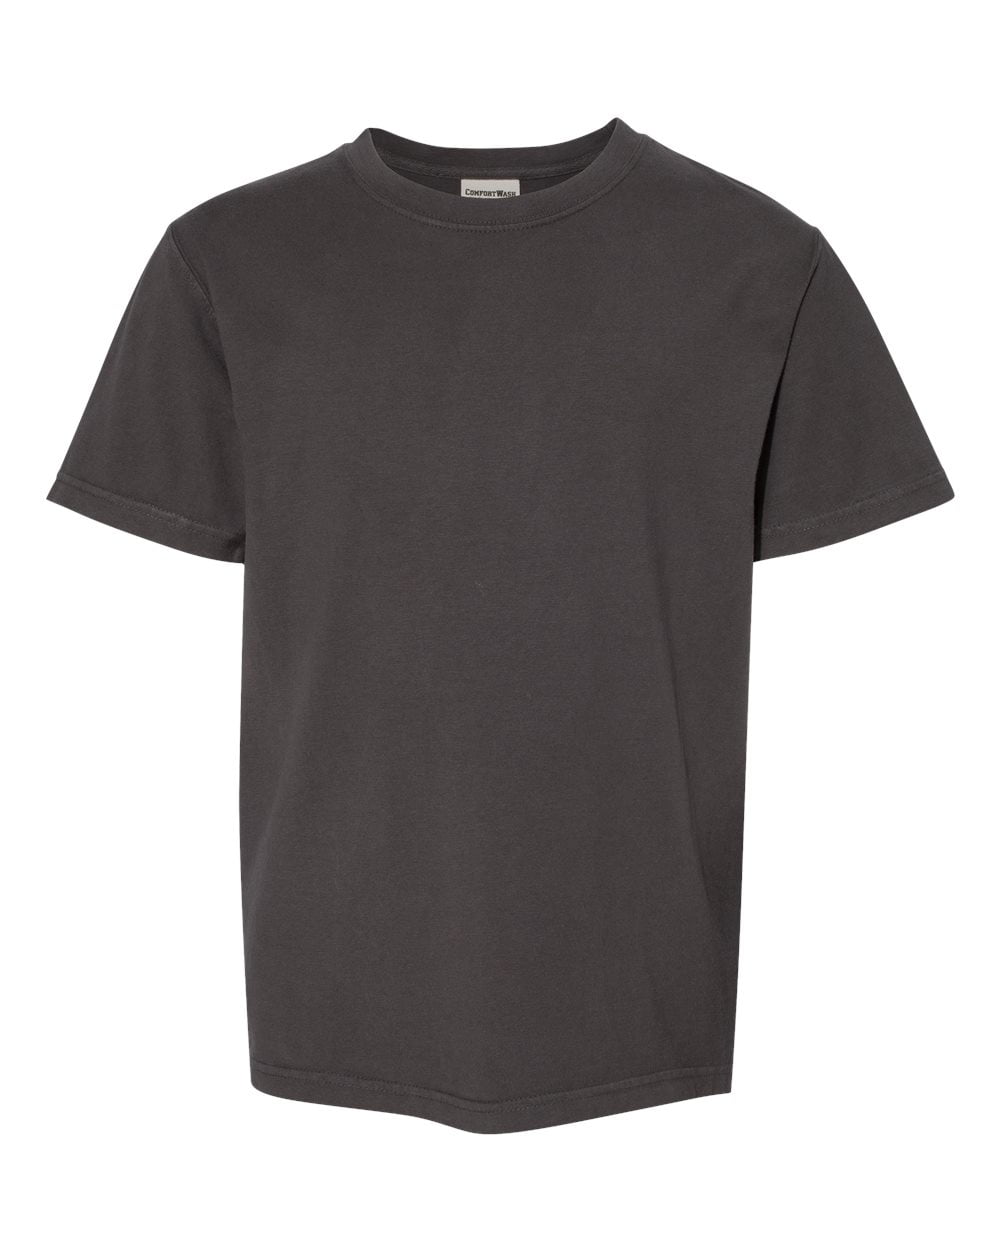 100% Soft Spun Cotton T-Shirt Marky G Apparel Mens 5.5 Oz